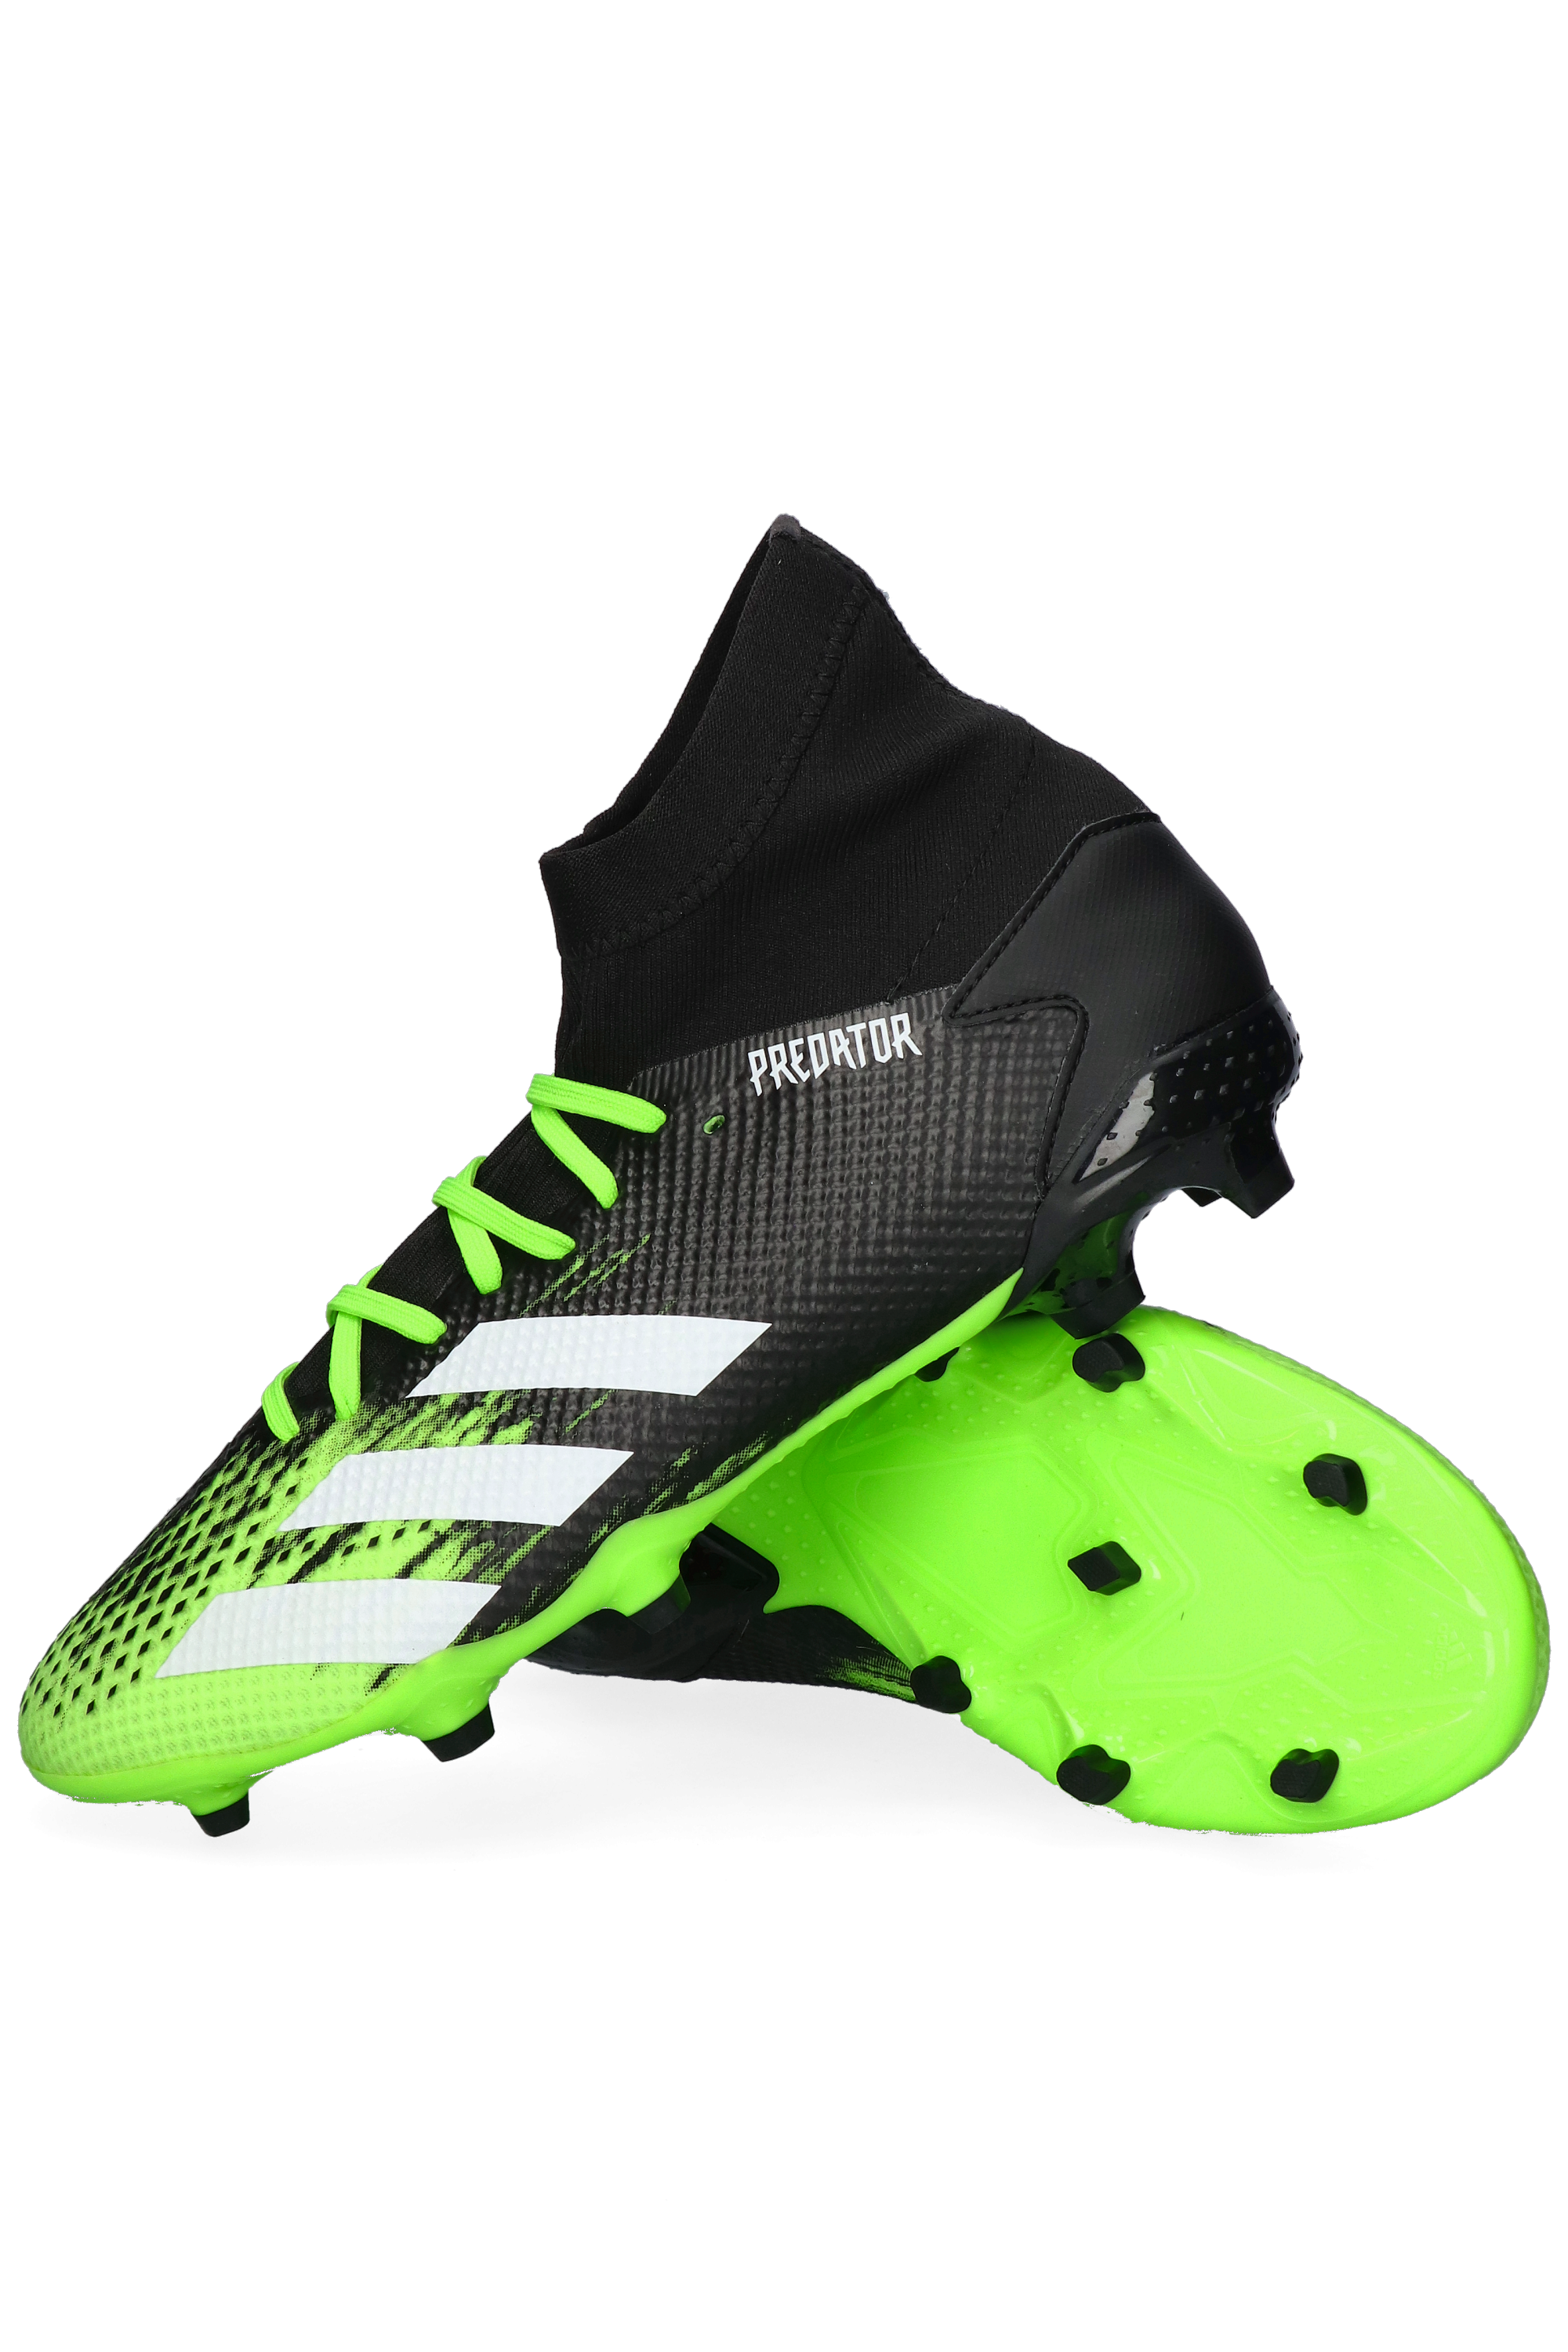 adidas Predator 20.3 FG | R-GOL.com - Football boots & equipment